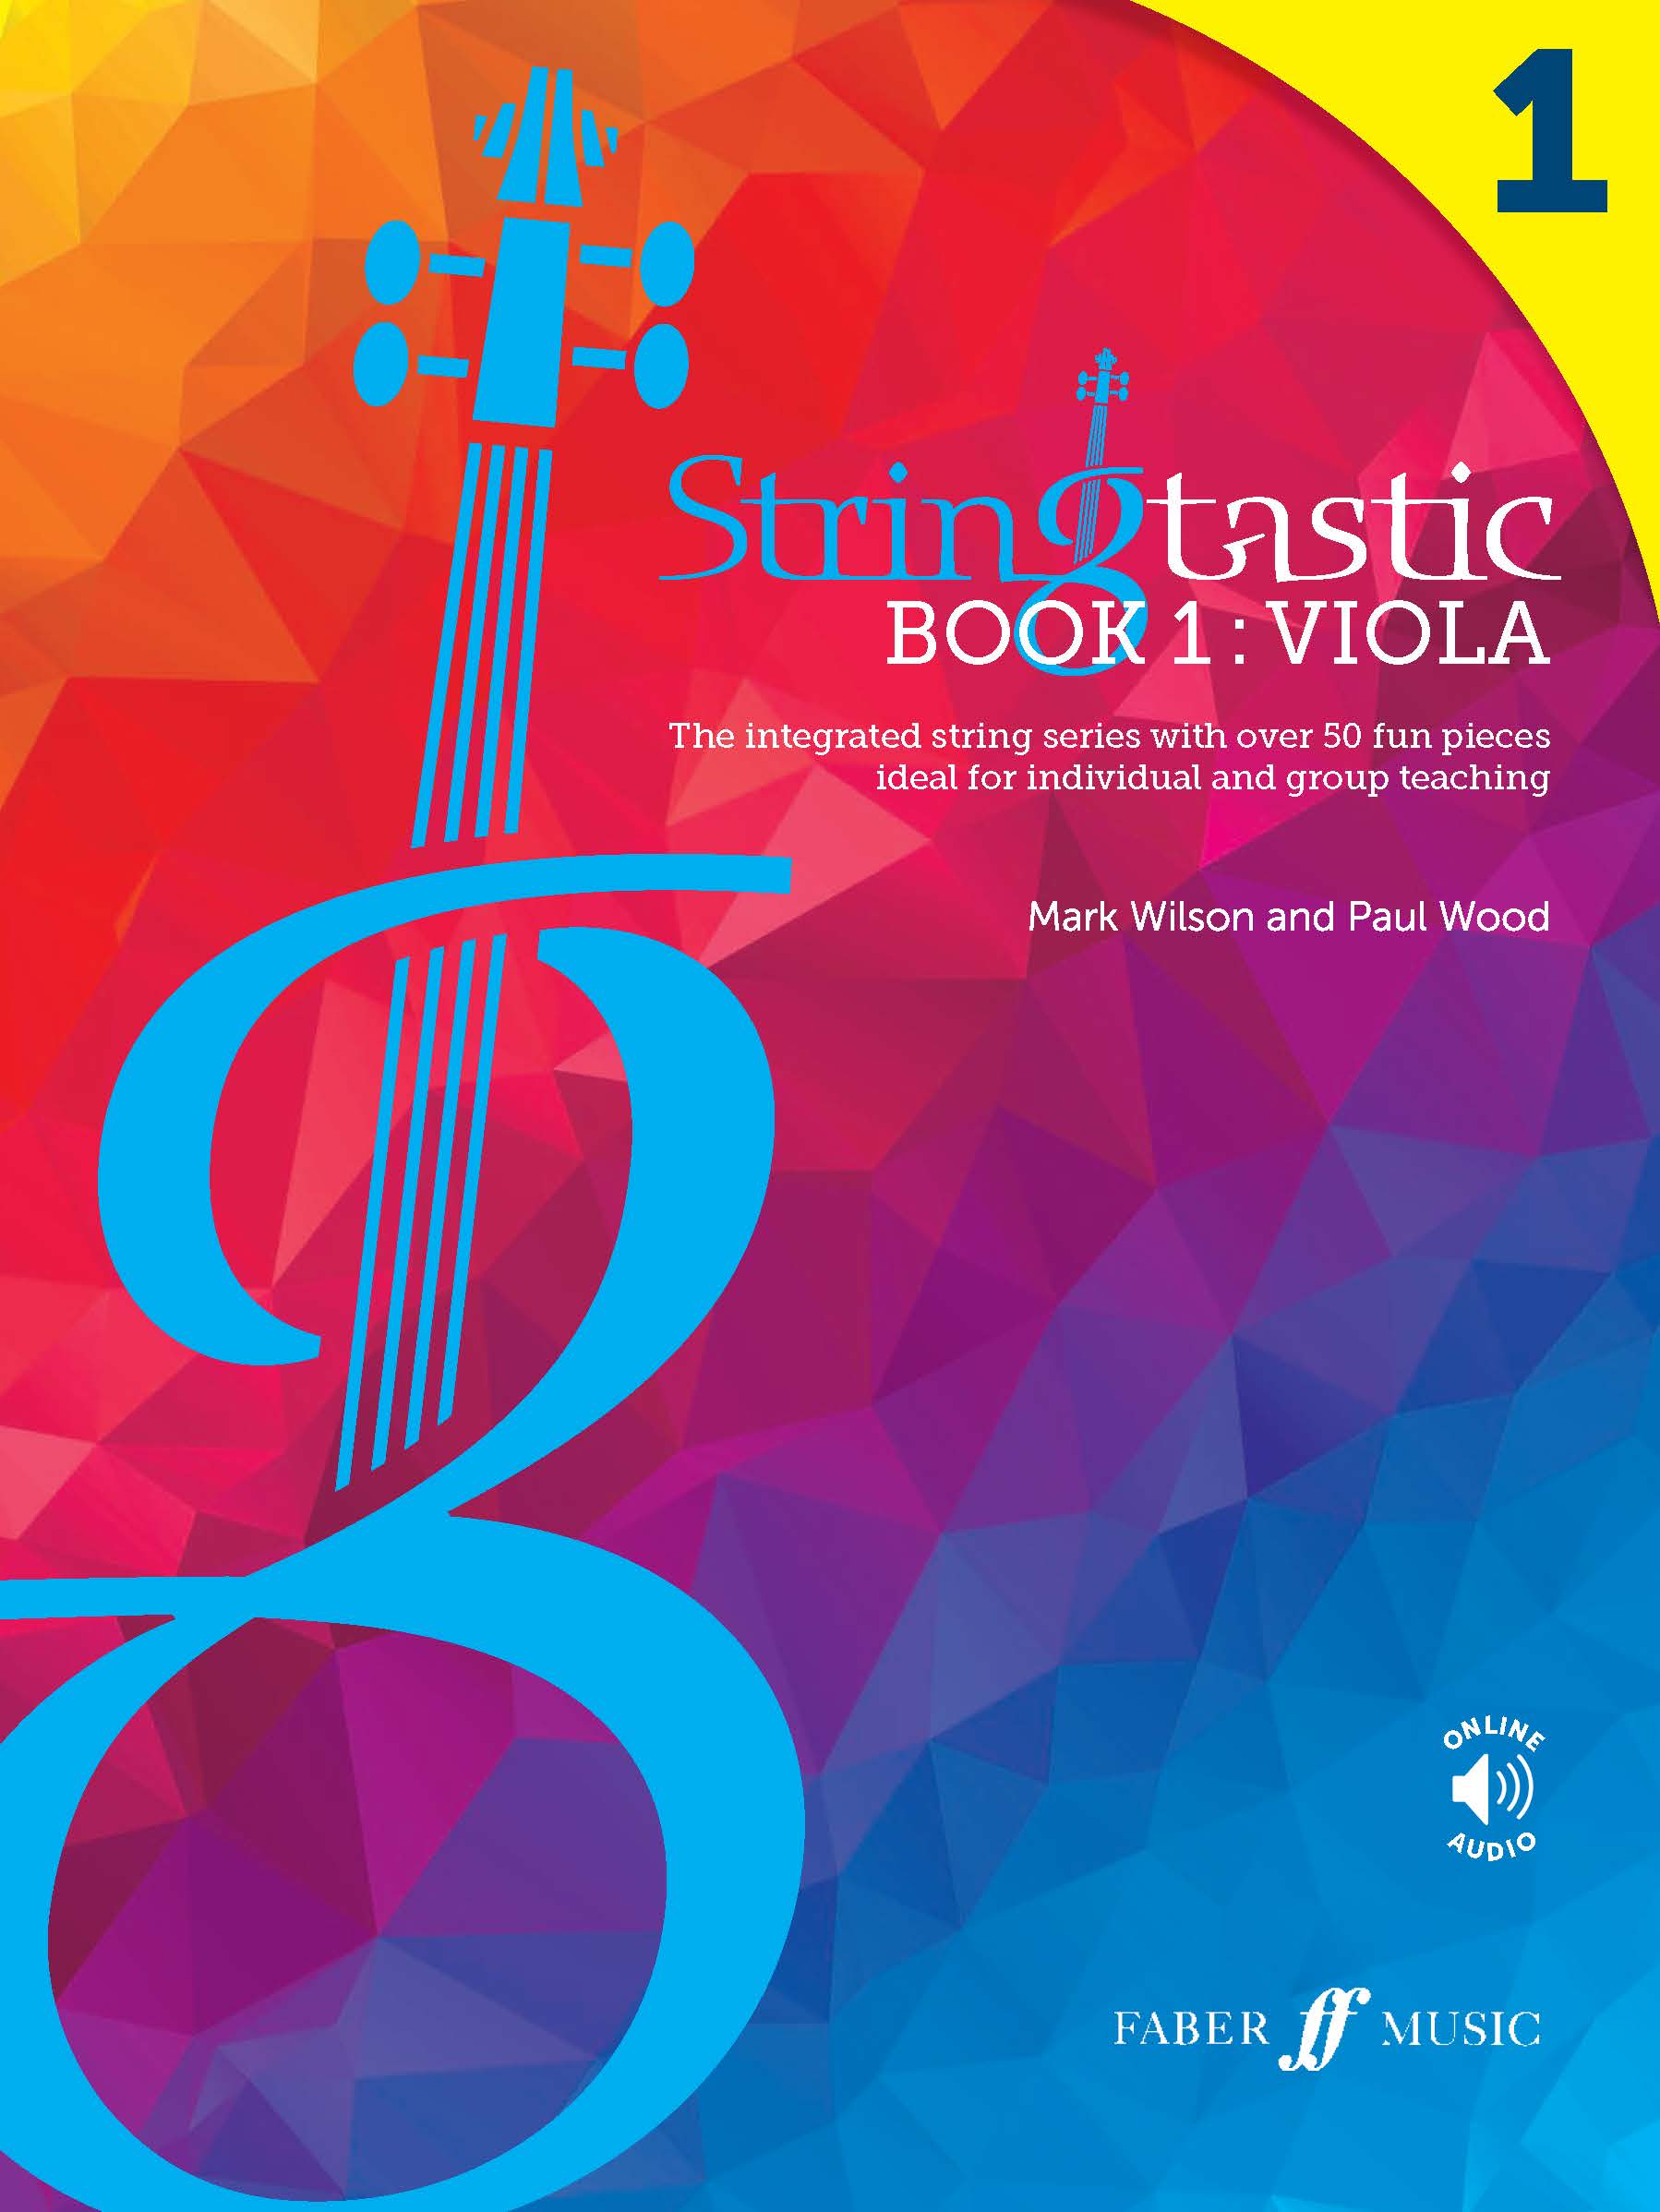 Stringtastic Book 1 Viola Sheet Music Songbook